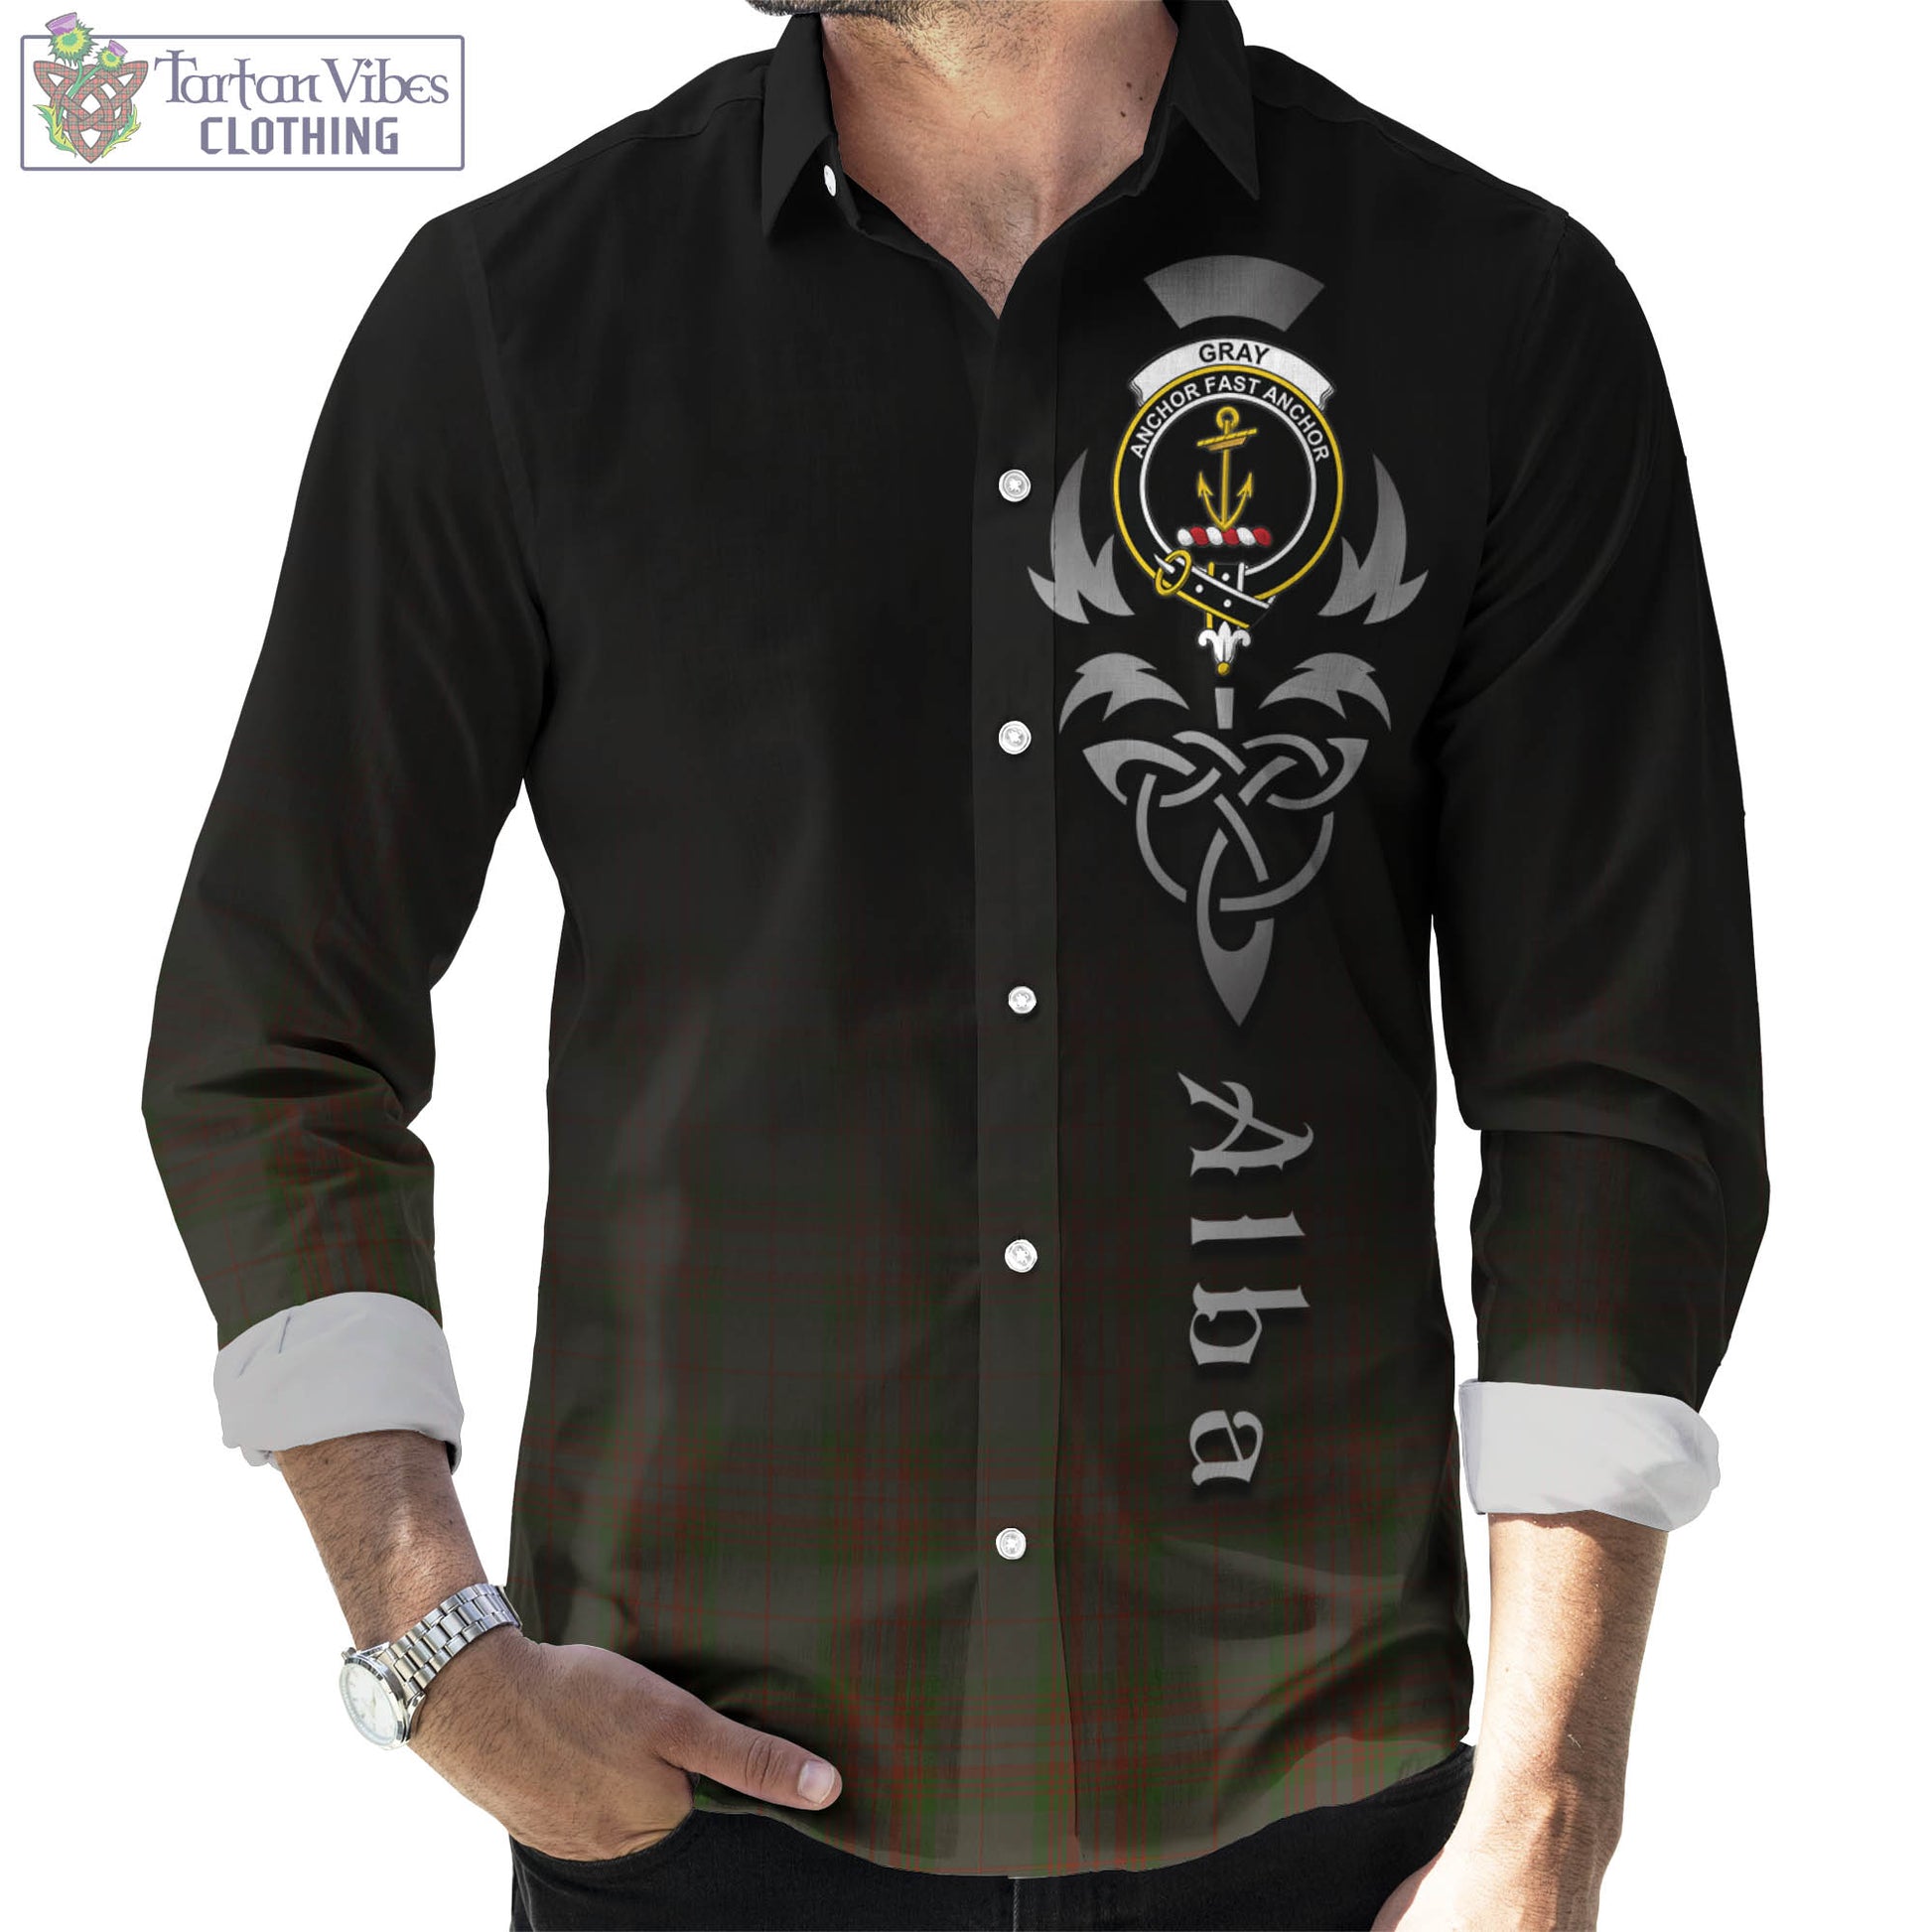 Tartan Vibes Clothing Gray Tartan Long Sleeve Button Up Featuring Alba Gu Brath Family Crest Celtic Inspired